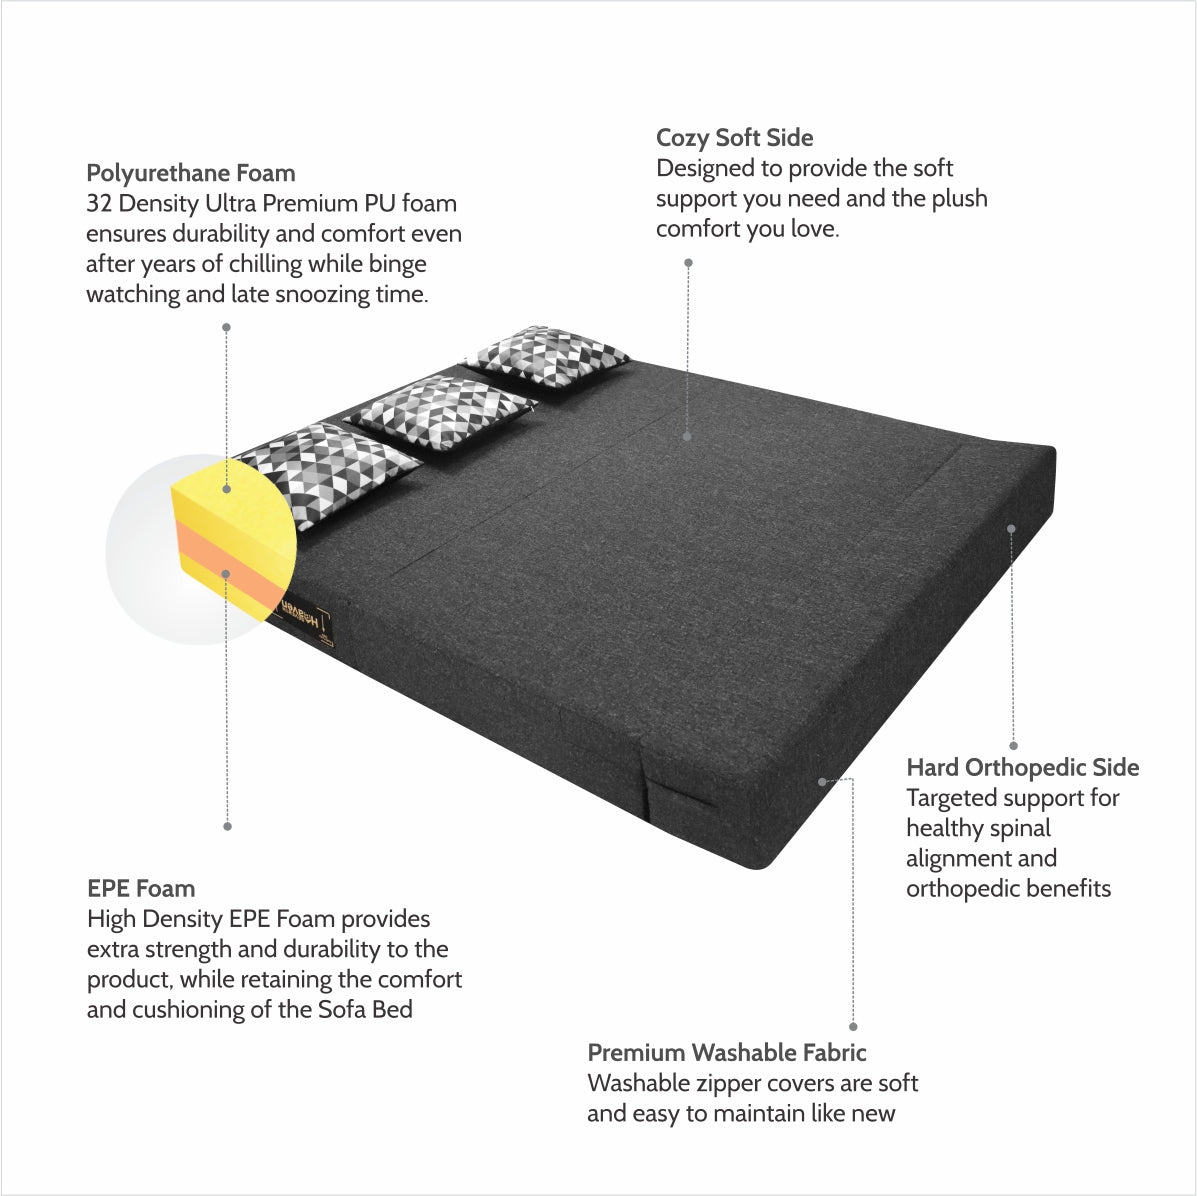 Grey Jute Fabric 6×5 Sofa cum Bed with Printed Cushion